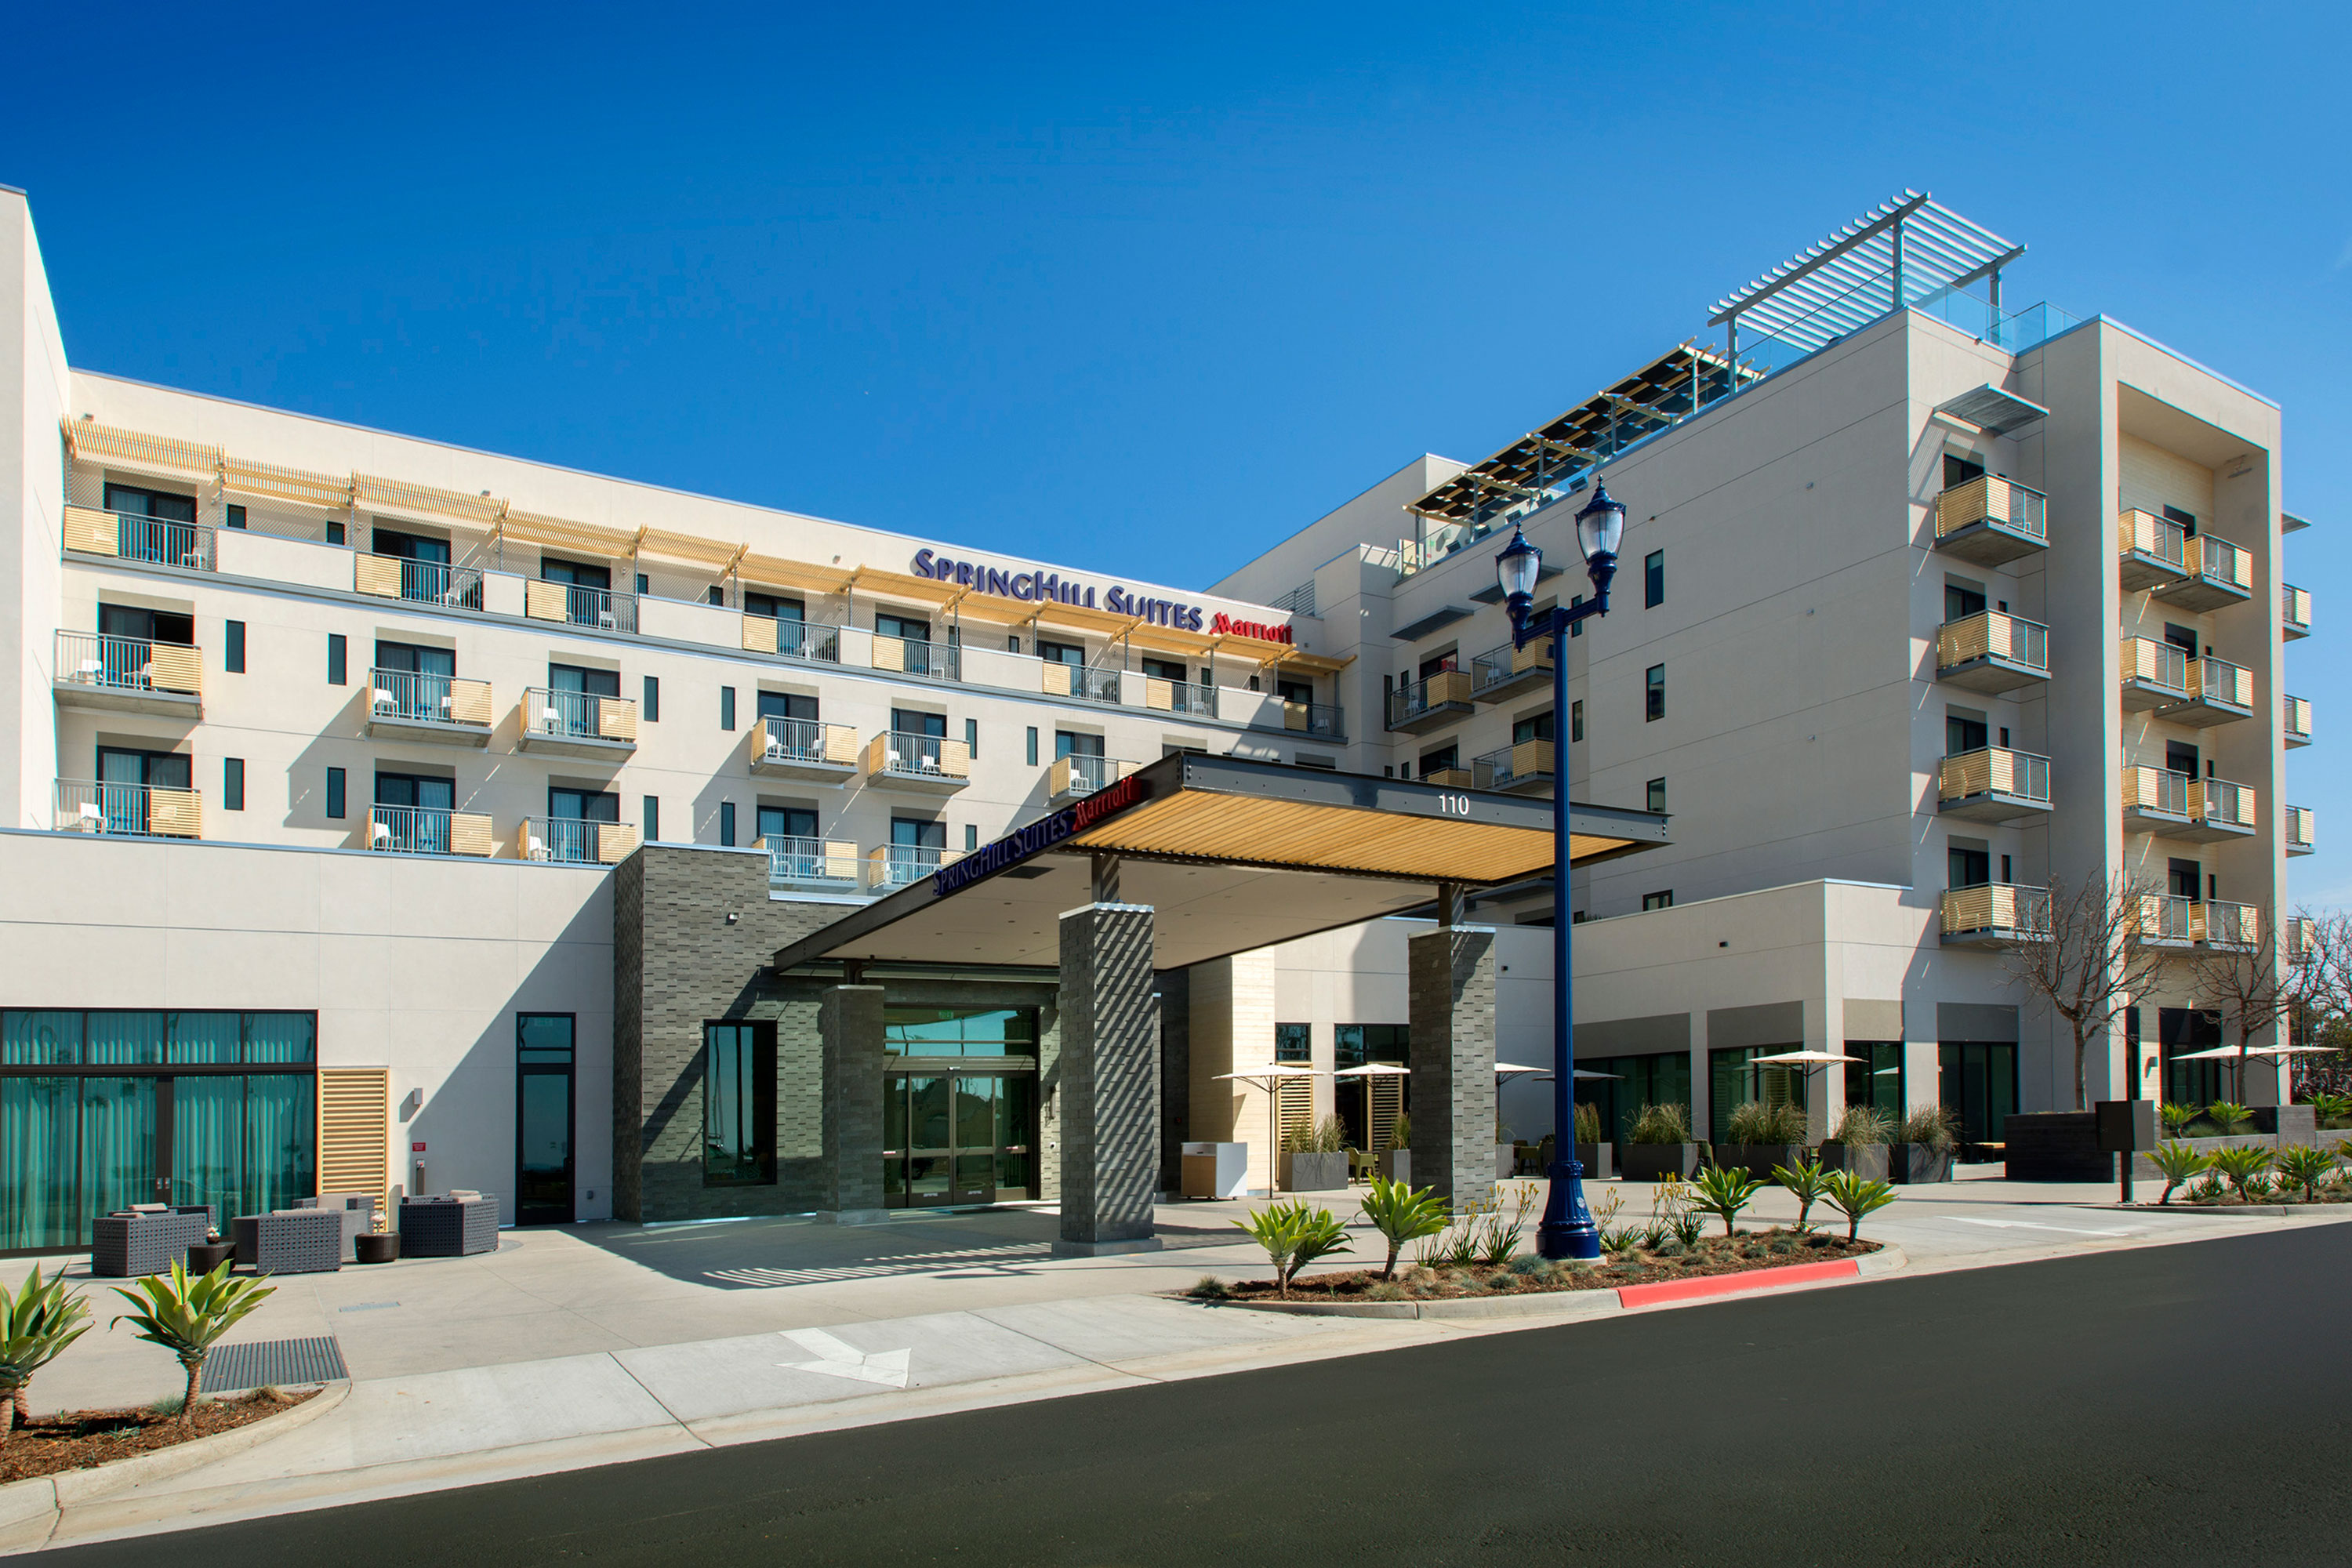 SpringHill Suites Marriott - Oceanside, CA